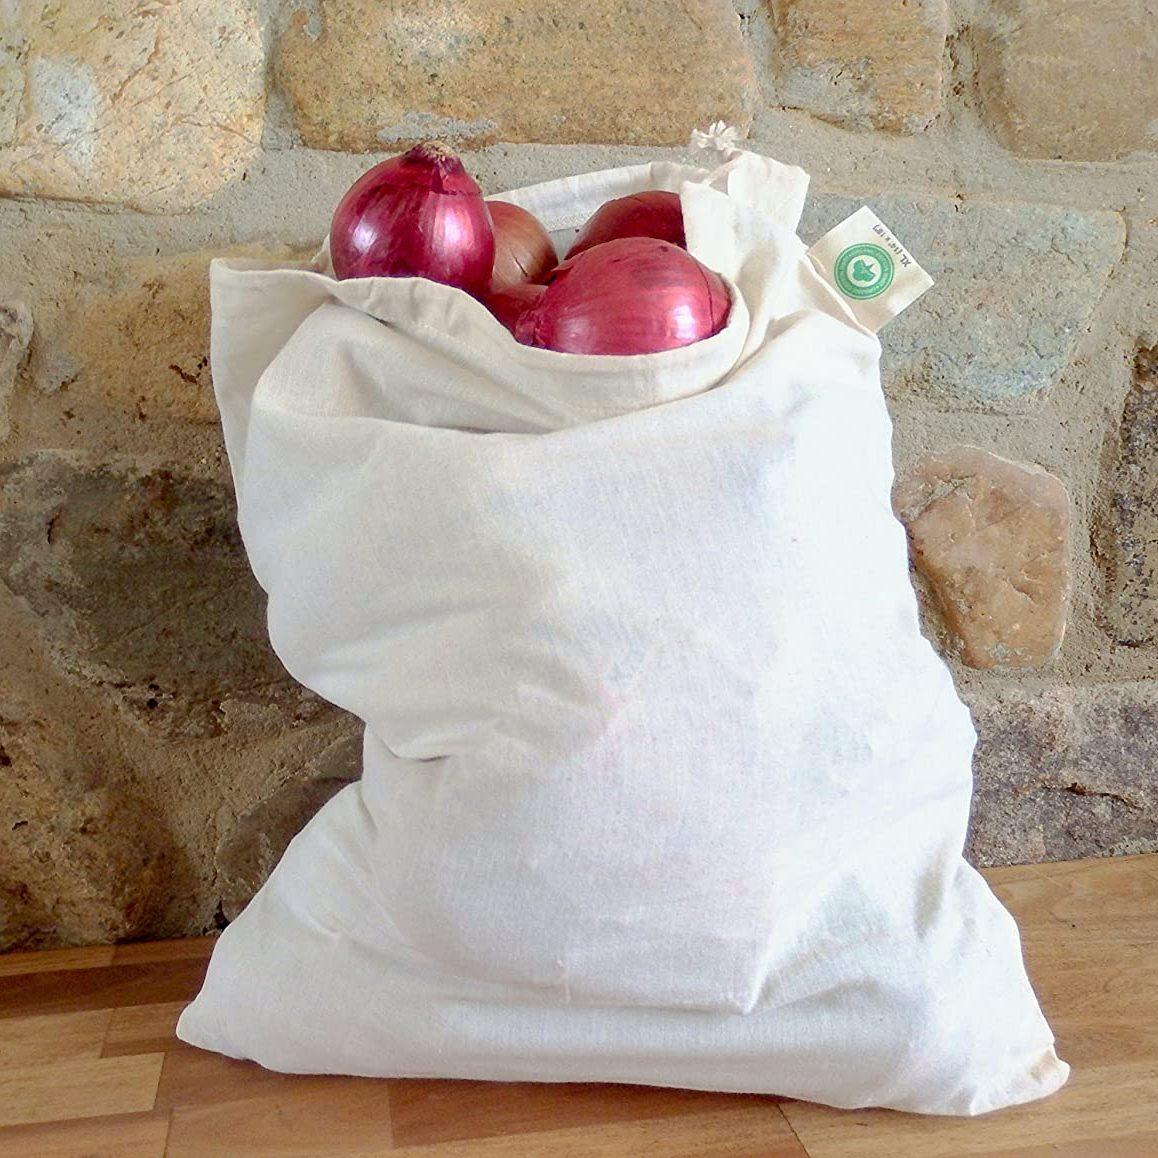 https://www.tasteofhome.com/wp-content/uploads/2023/01/reusable-produce-bags-ecomm-via-amazon-ft-e1674579516529.jpg